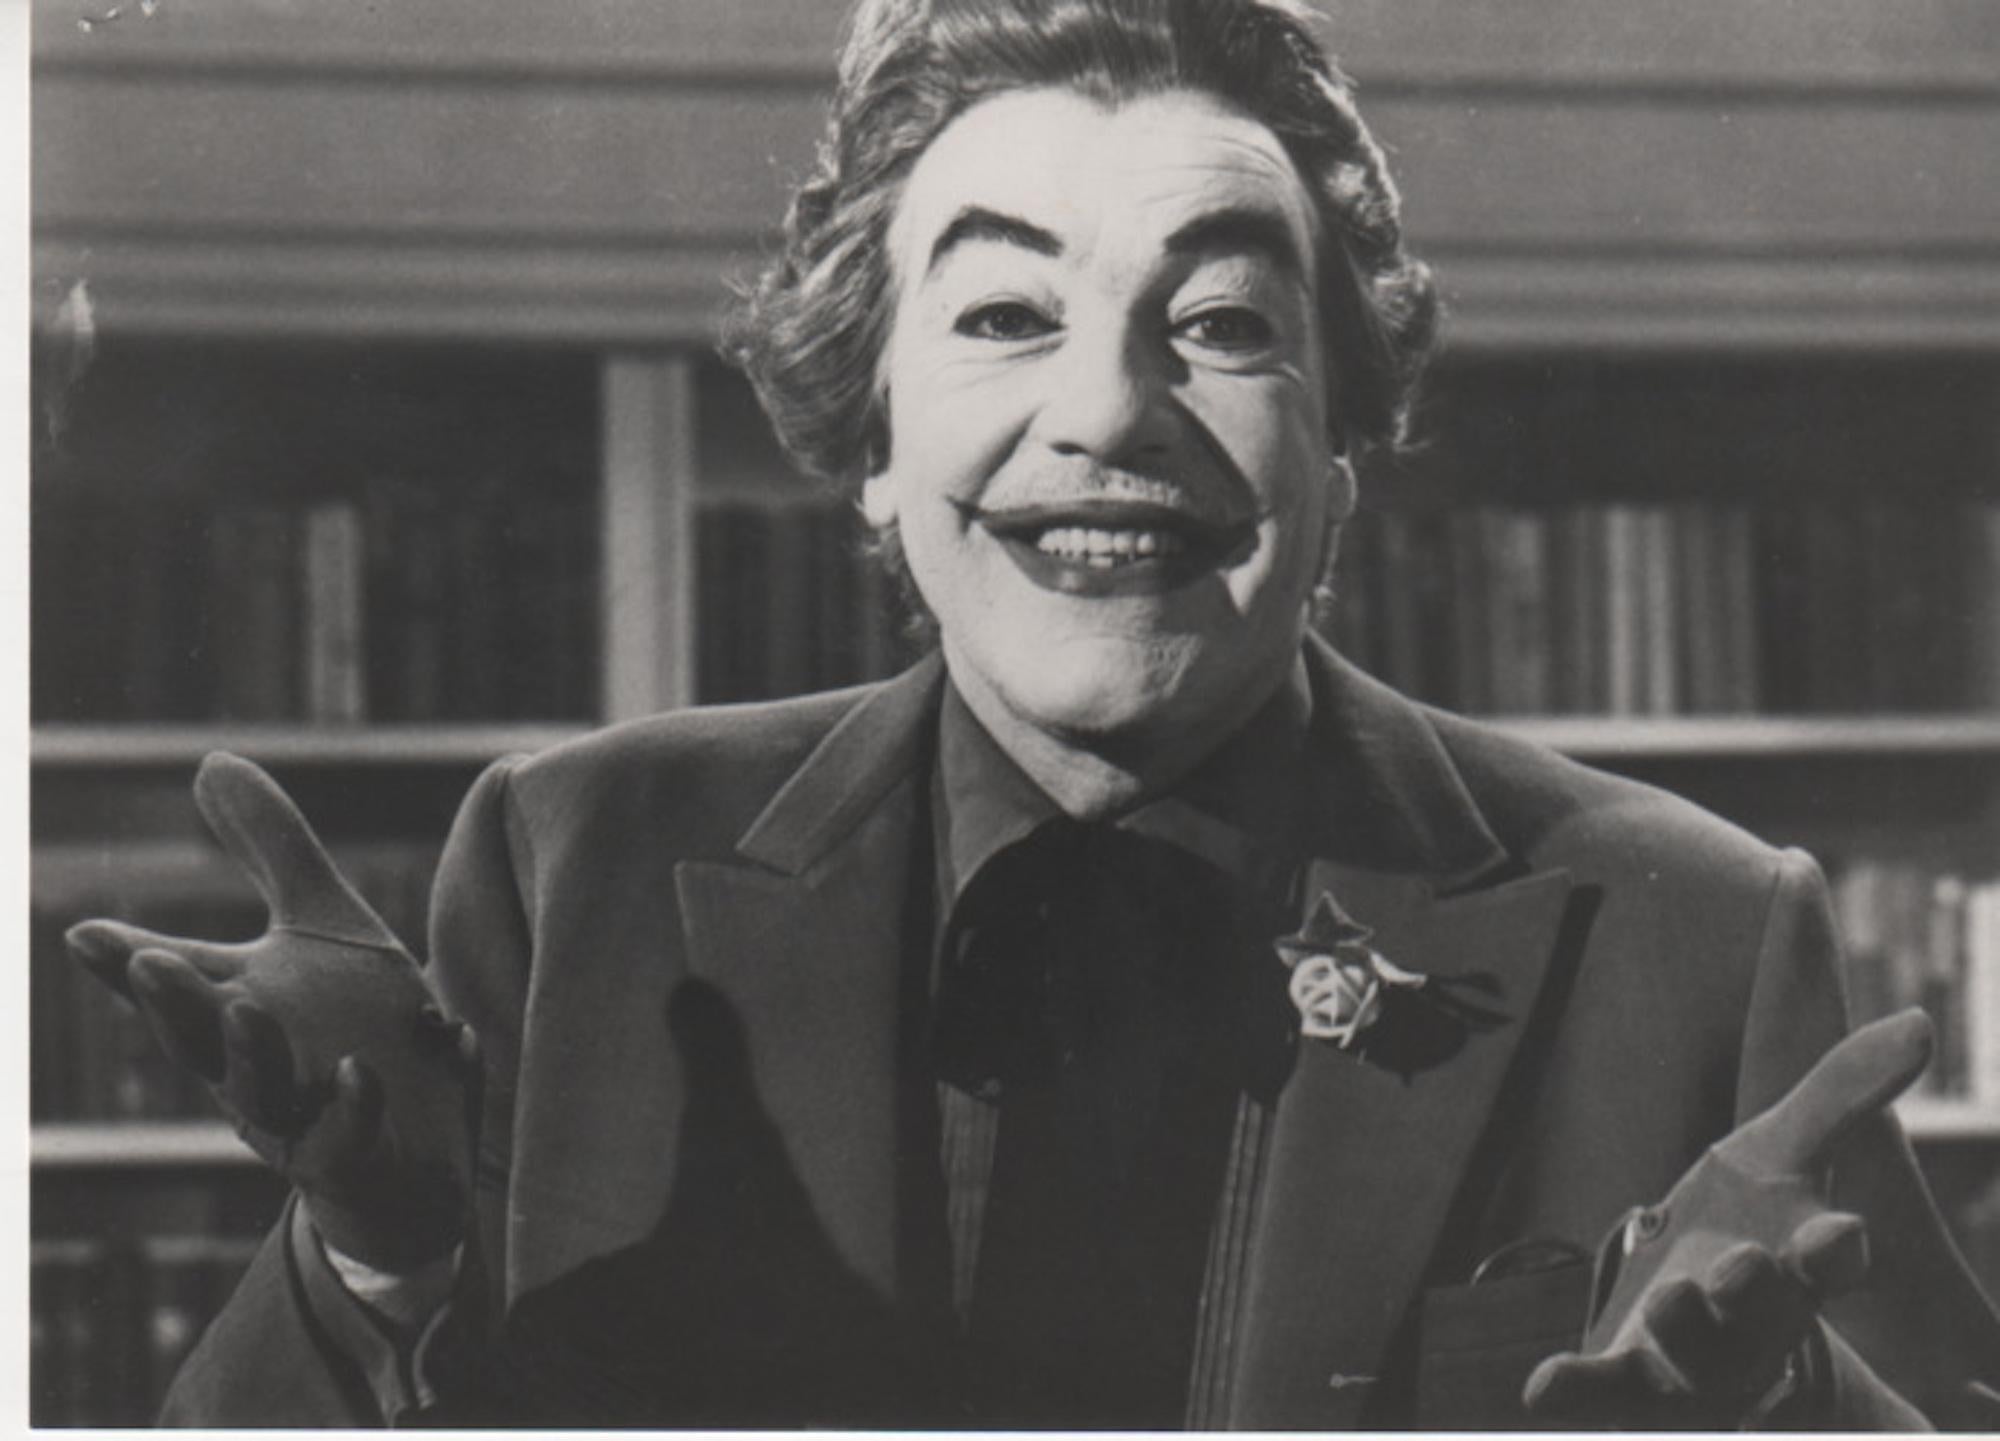 César Romero como "El Joker" - Foto de época -1966